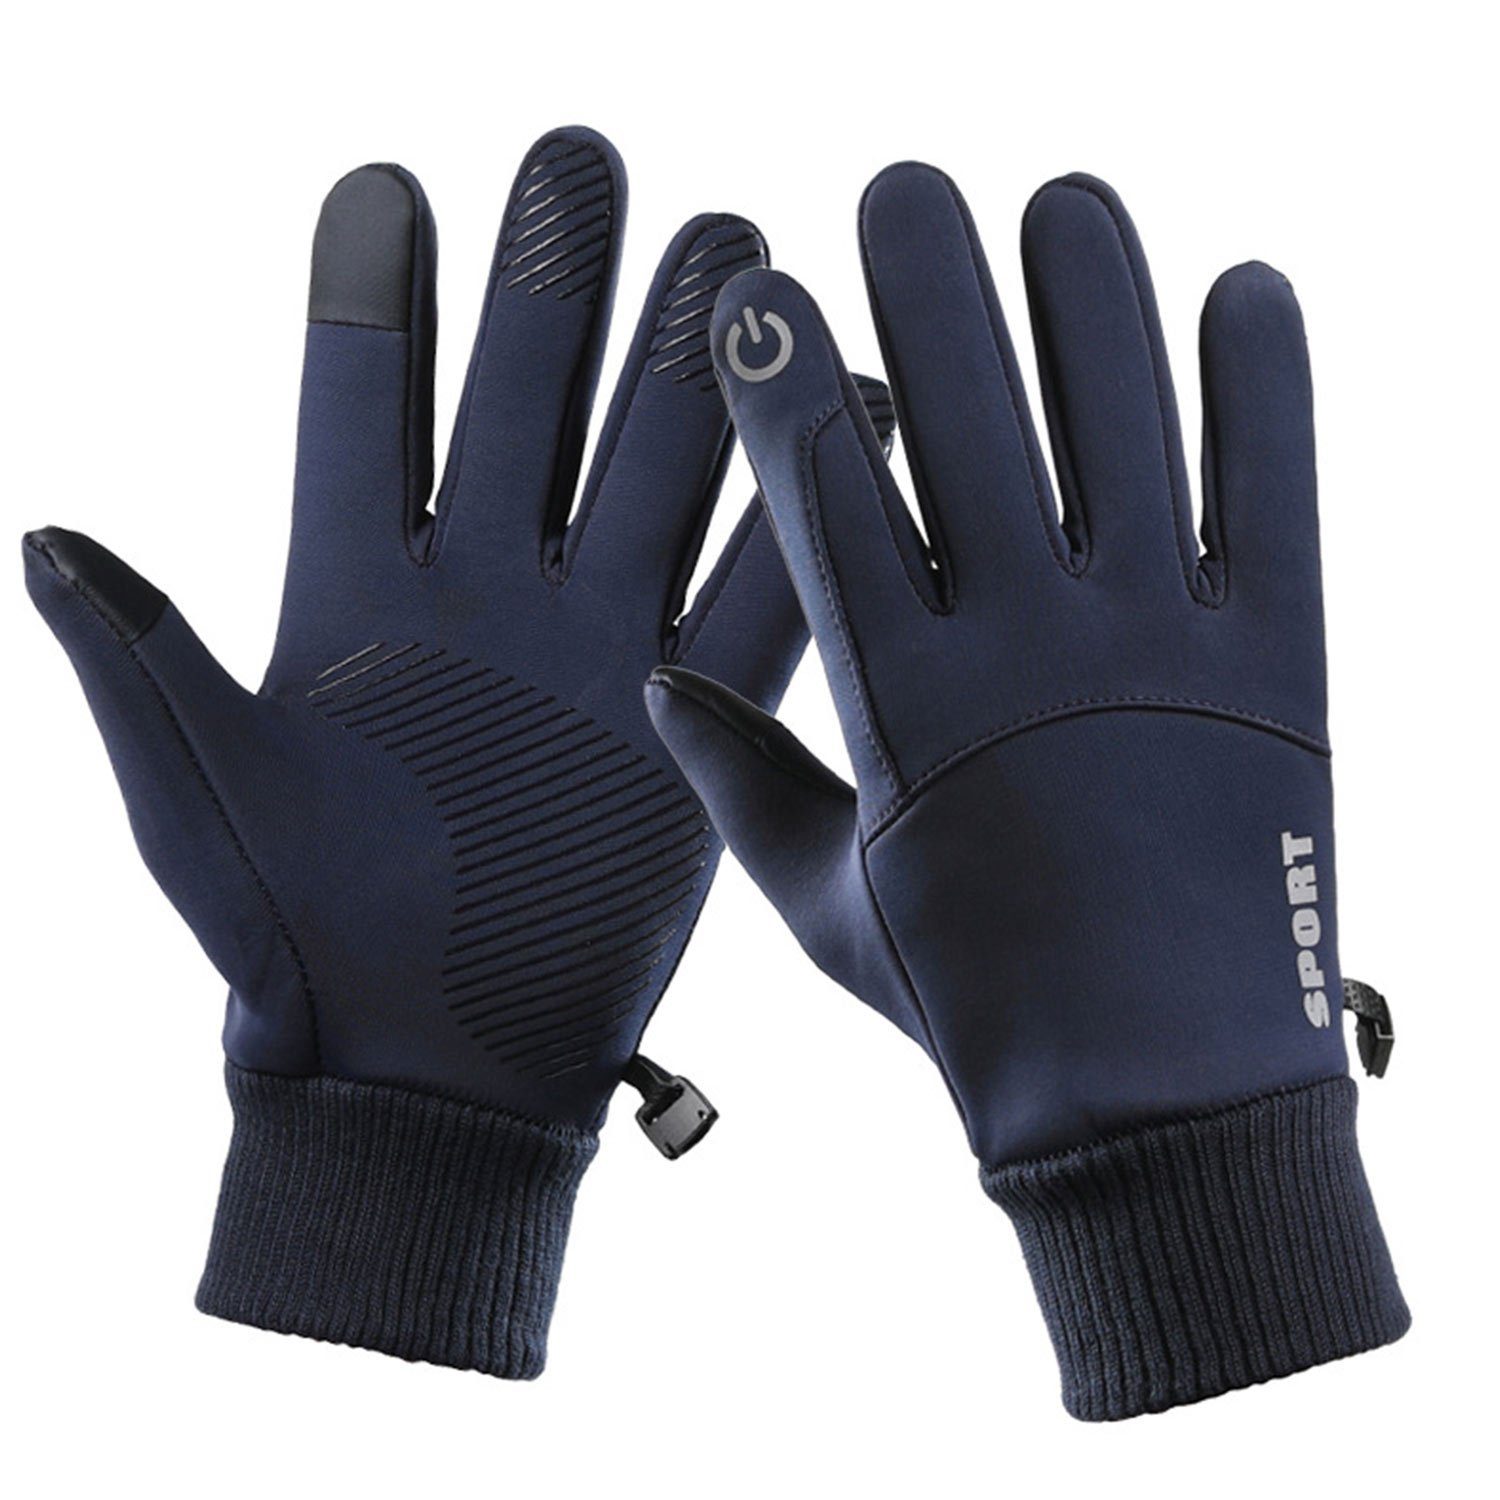 MAGICSHE Fahrradhandschuhe Unisex Touchscreen Handschuhe warme Handschuhe Geeignet zum Radfahren, Skifahren, Arbeiten im Freien blau